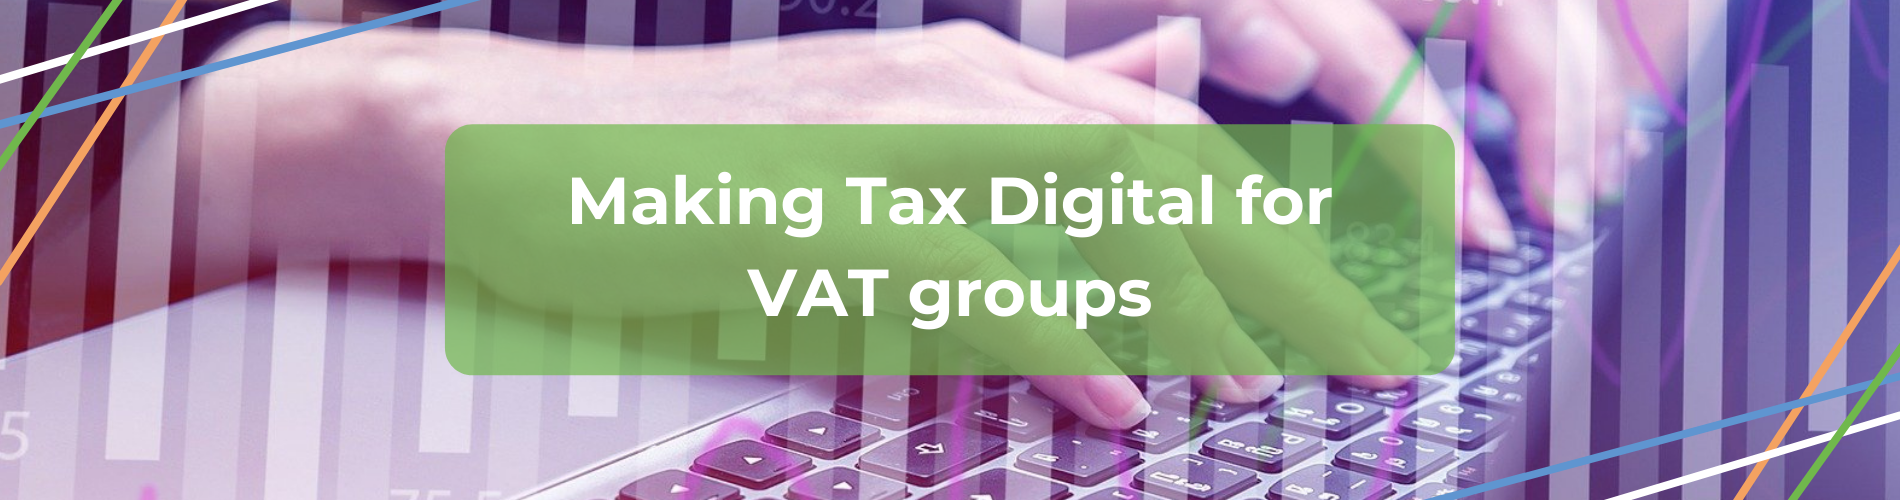 Master Making Tax Digital for VAT Groups